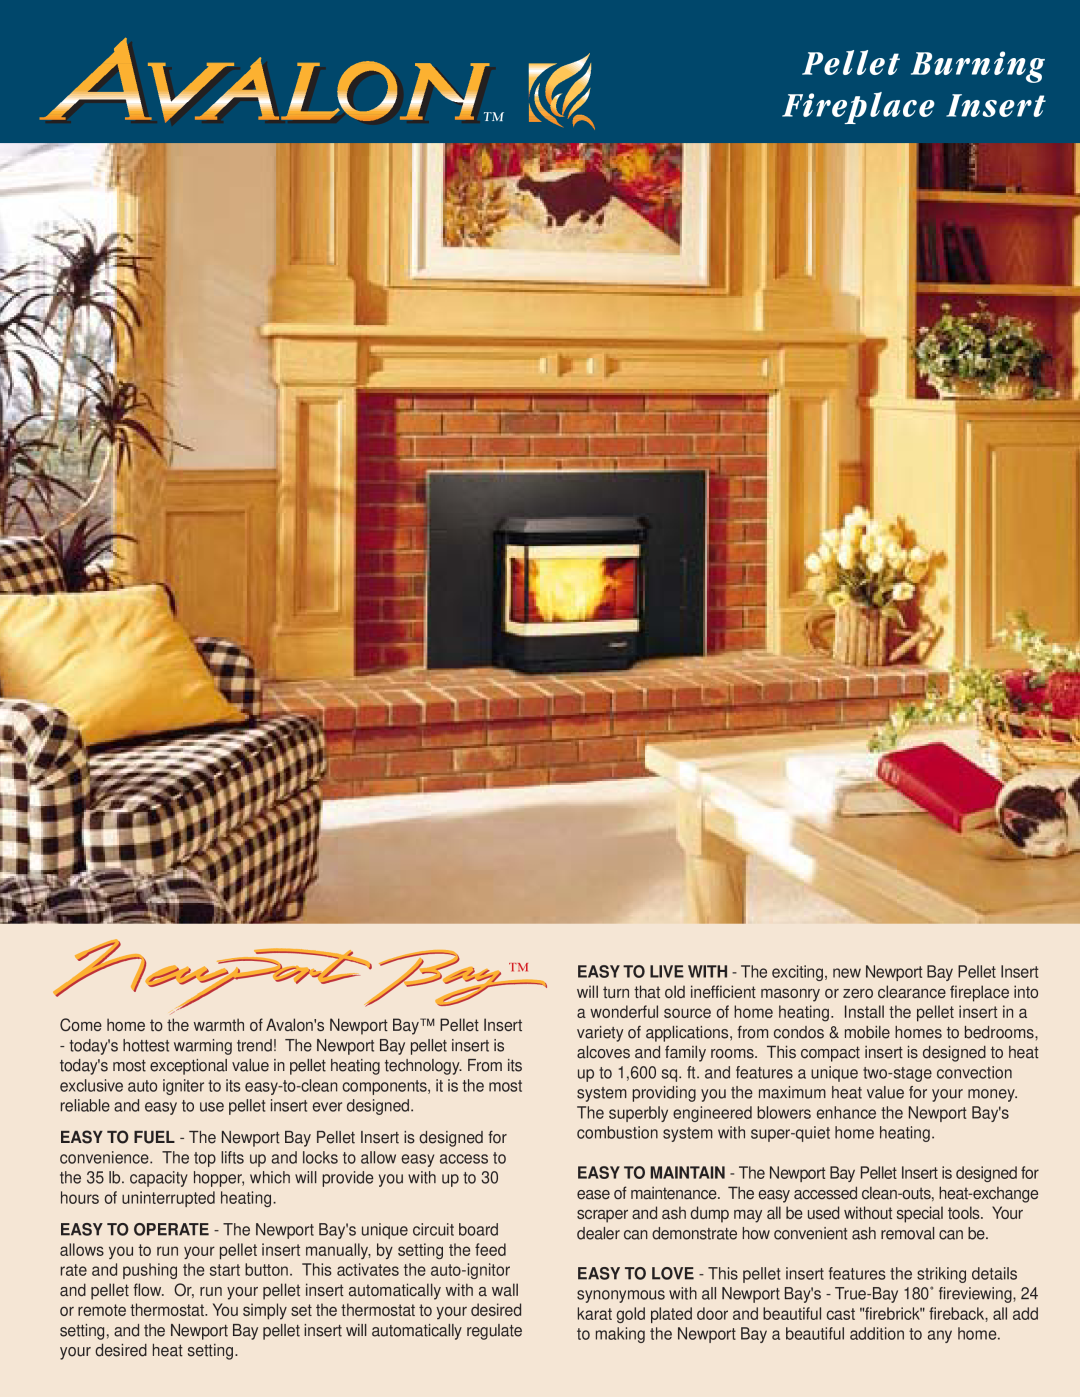 Avalon Stoves Newport Bay manual Pellet Burning Fireplace Insert 